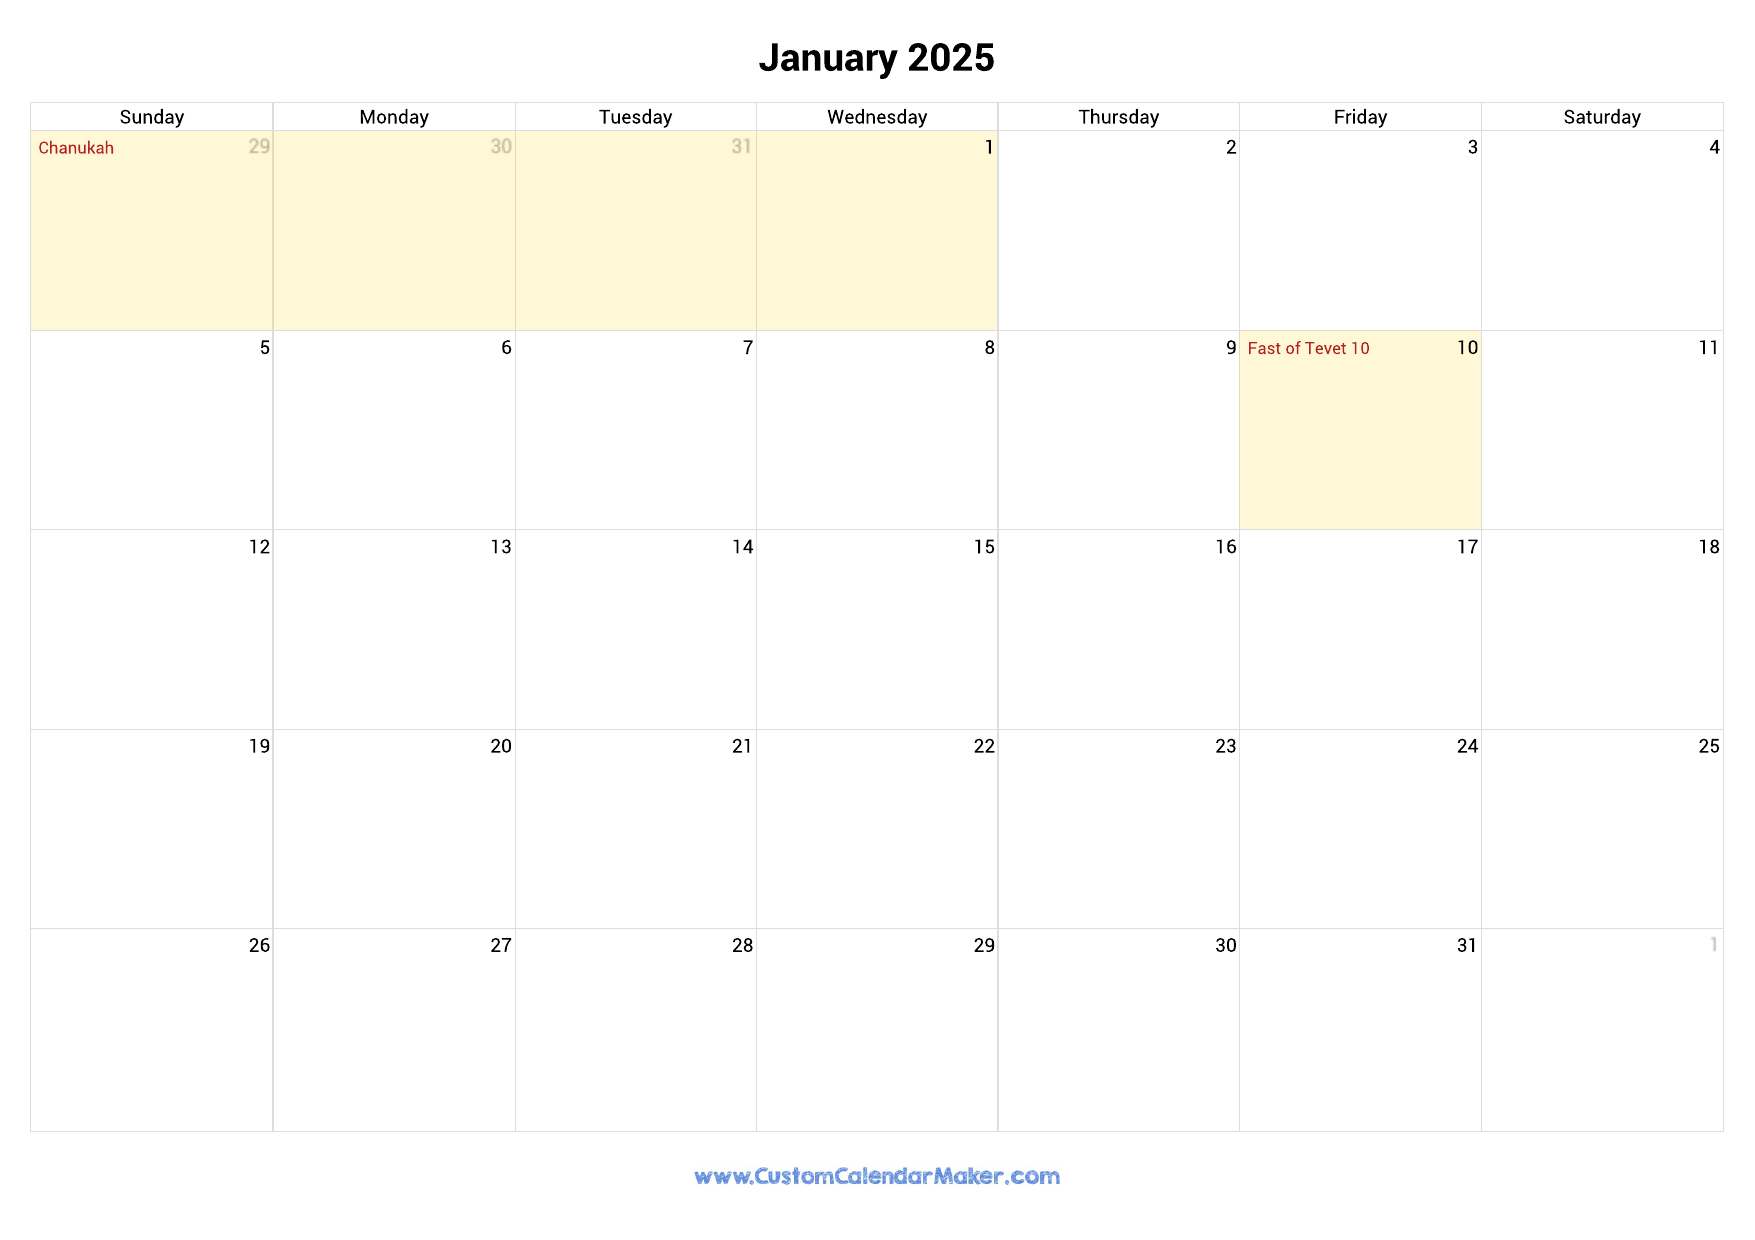 January 2025 Jewish Calendar with Hebrew Holidays